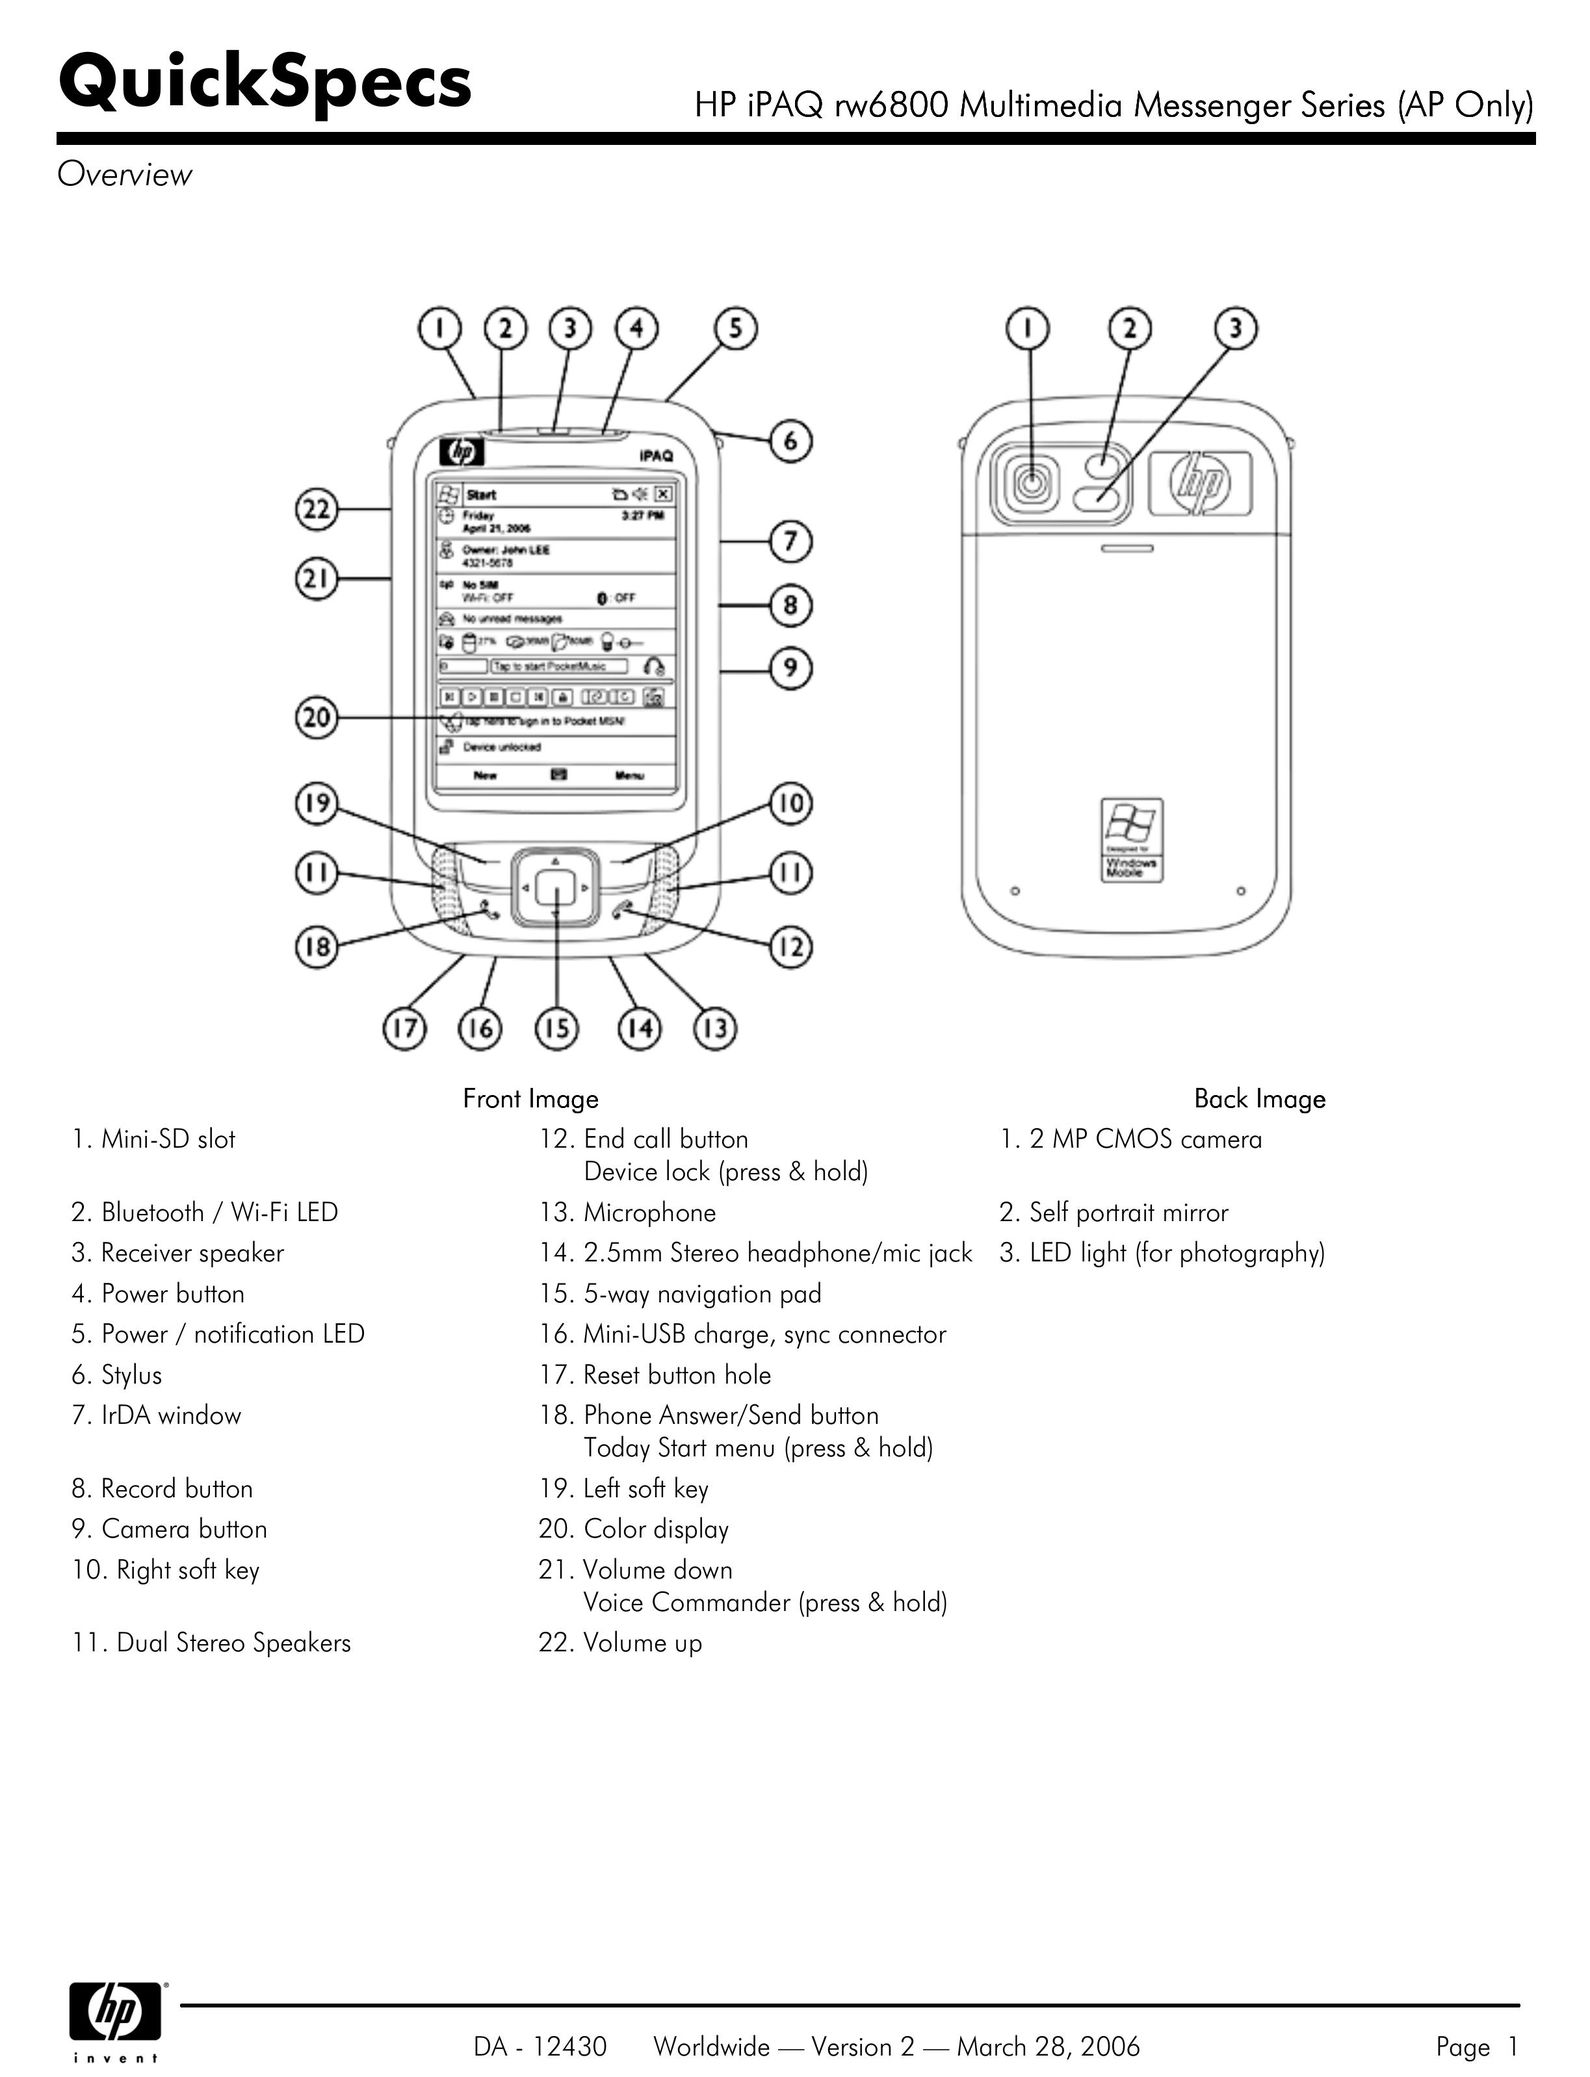 HP (Hewlett-Packard) rw6800 Cell Phone User Manual